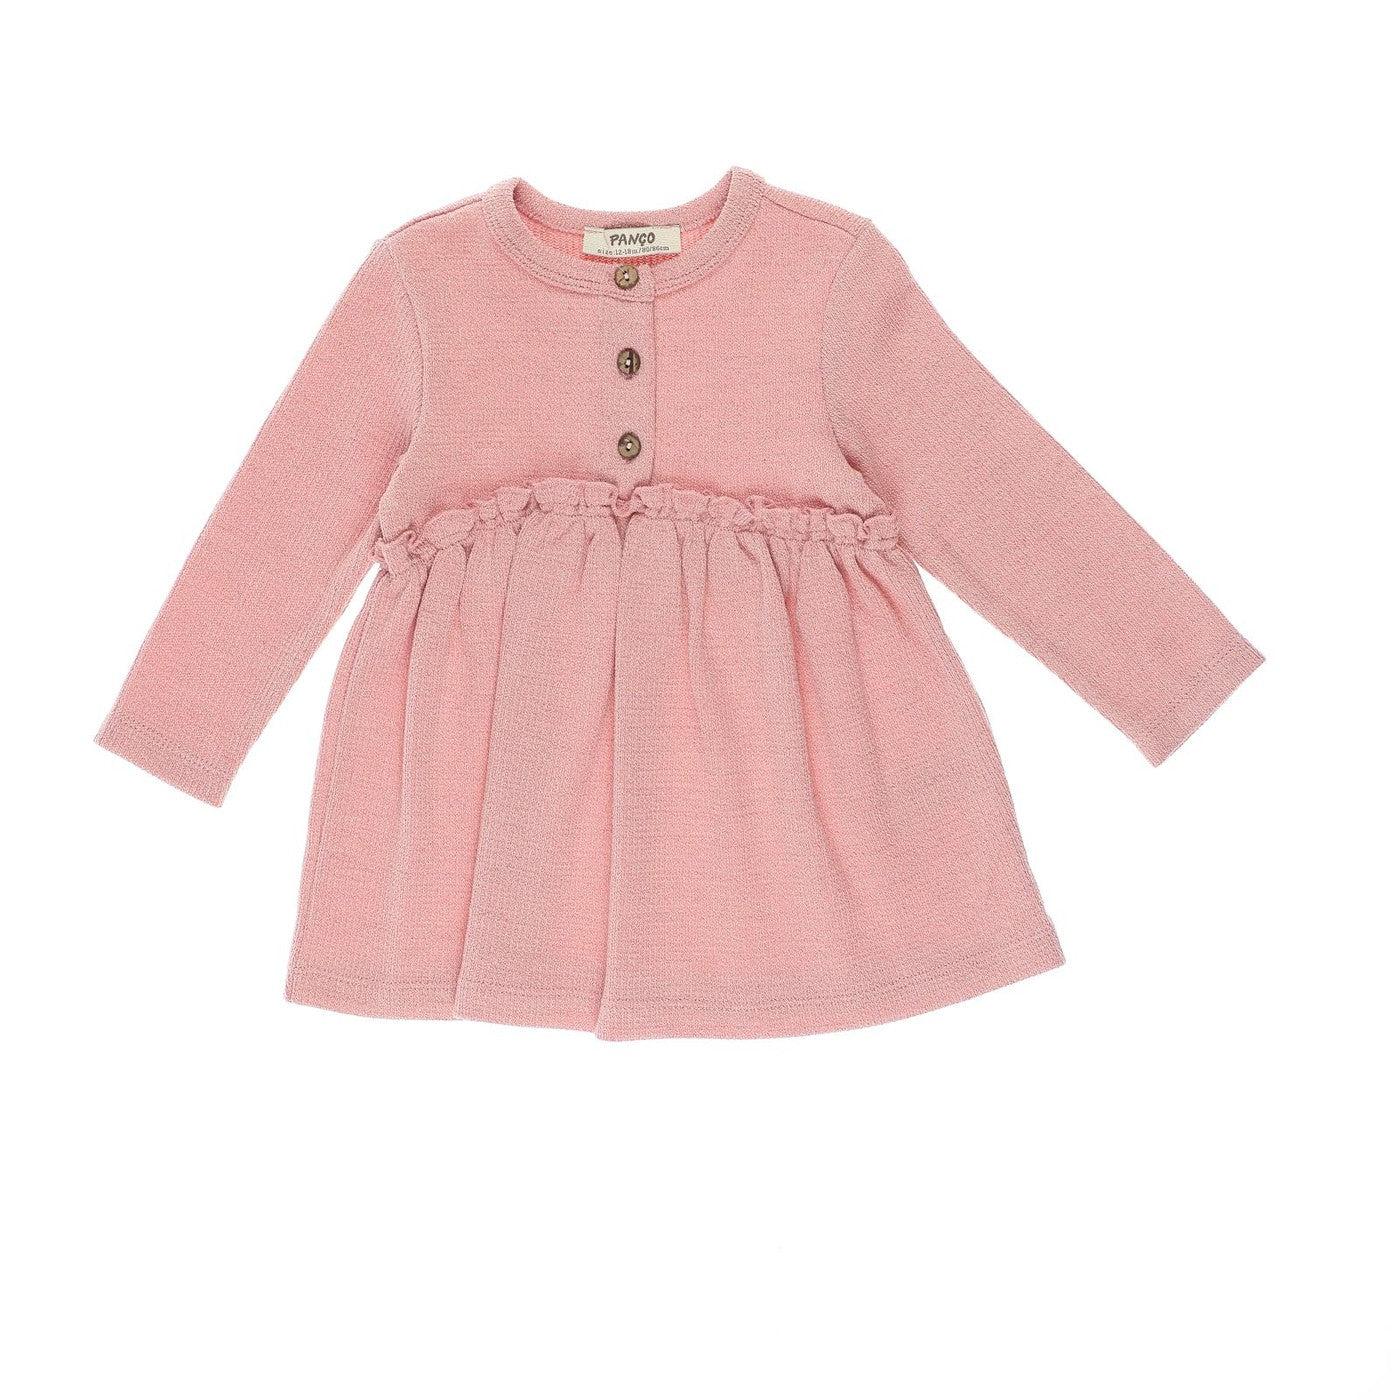 Selected image for PANÇO Pletena haljina za devojčice roze